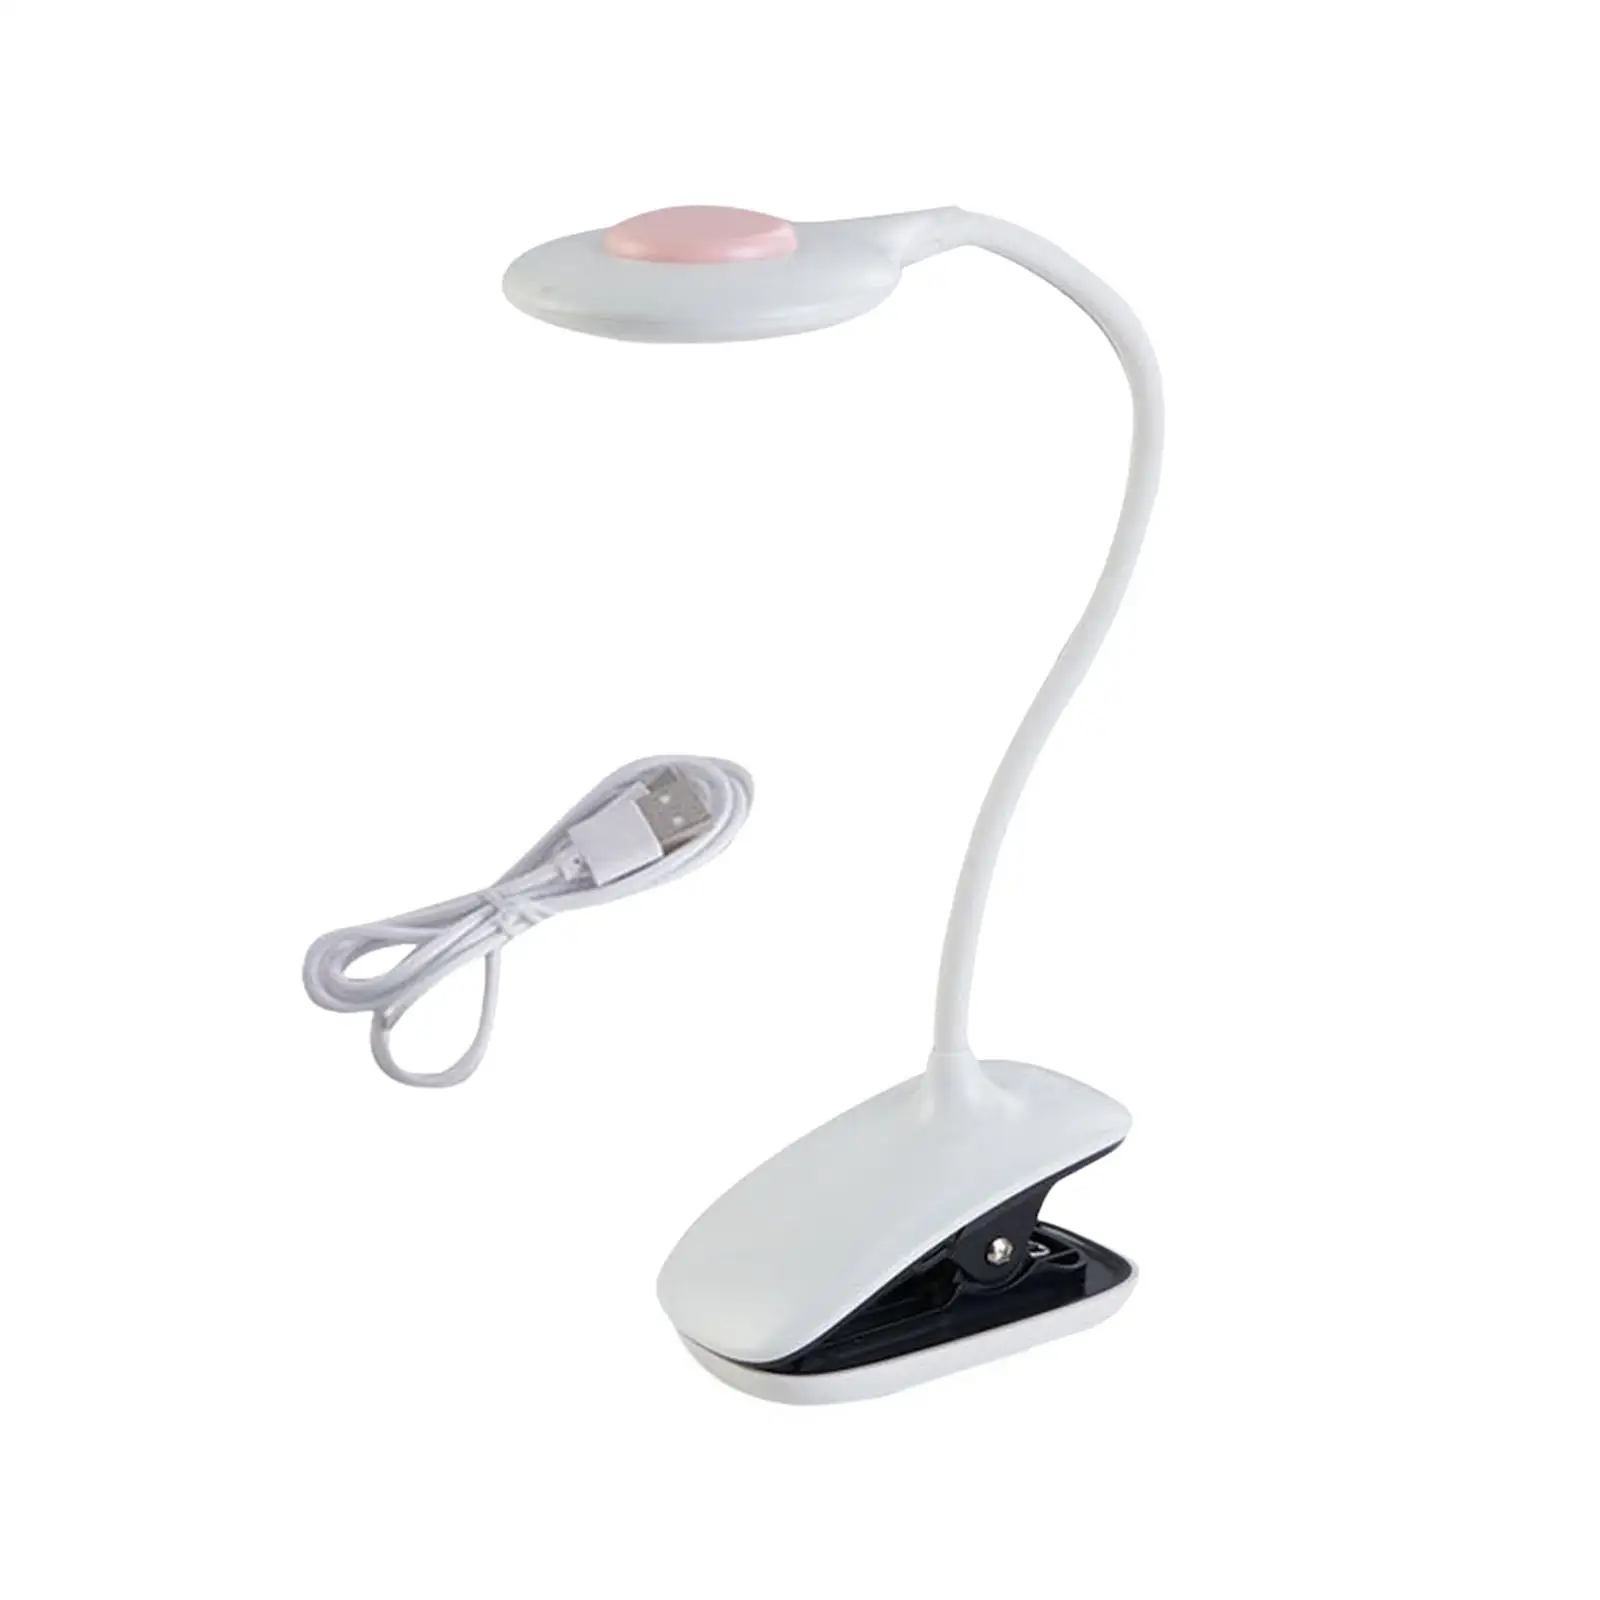 UV LED Nail Lamp 360 Degree Rotatable Nail Polish Dryer Flexible Desk Lamps Nail Polish Curing Lamp for Nail Salon Manicure Tool